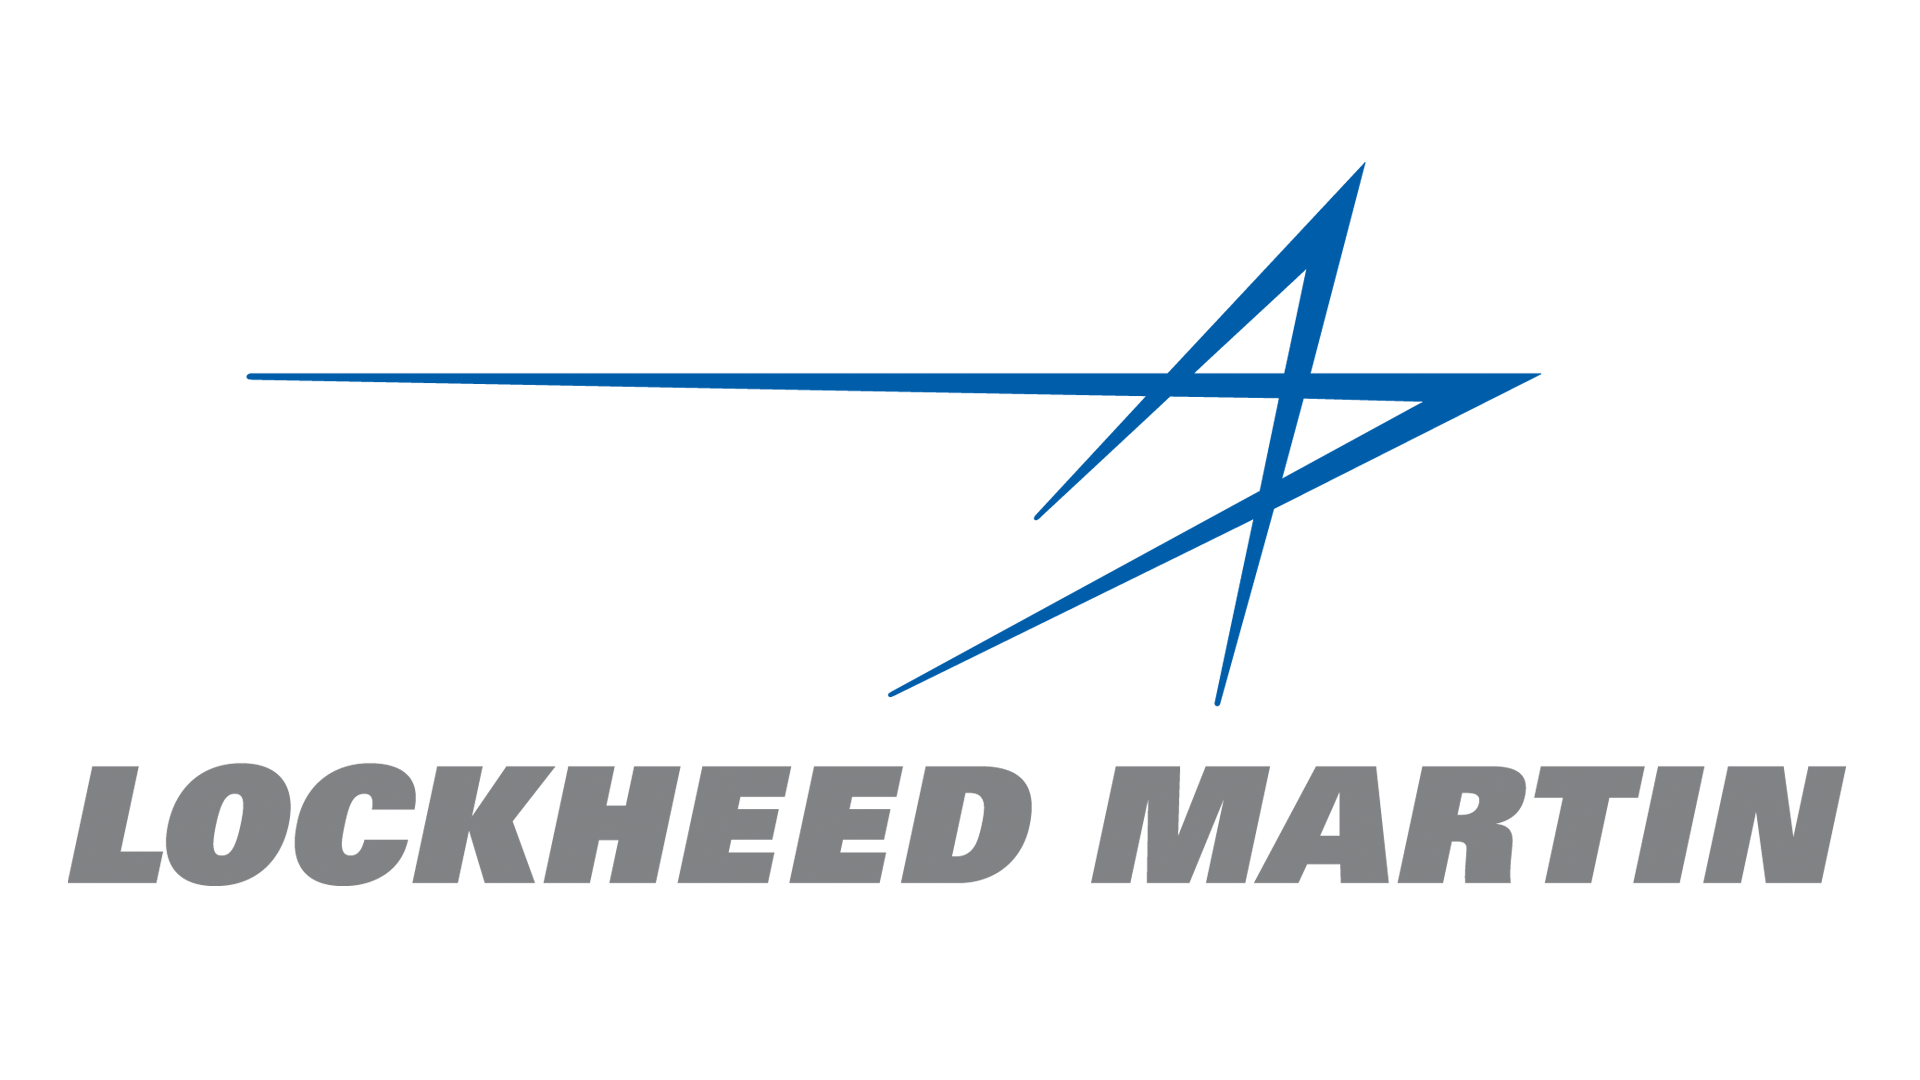 Lockheed Martin Inu LMI